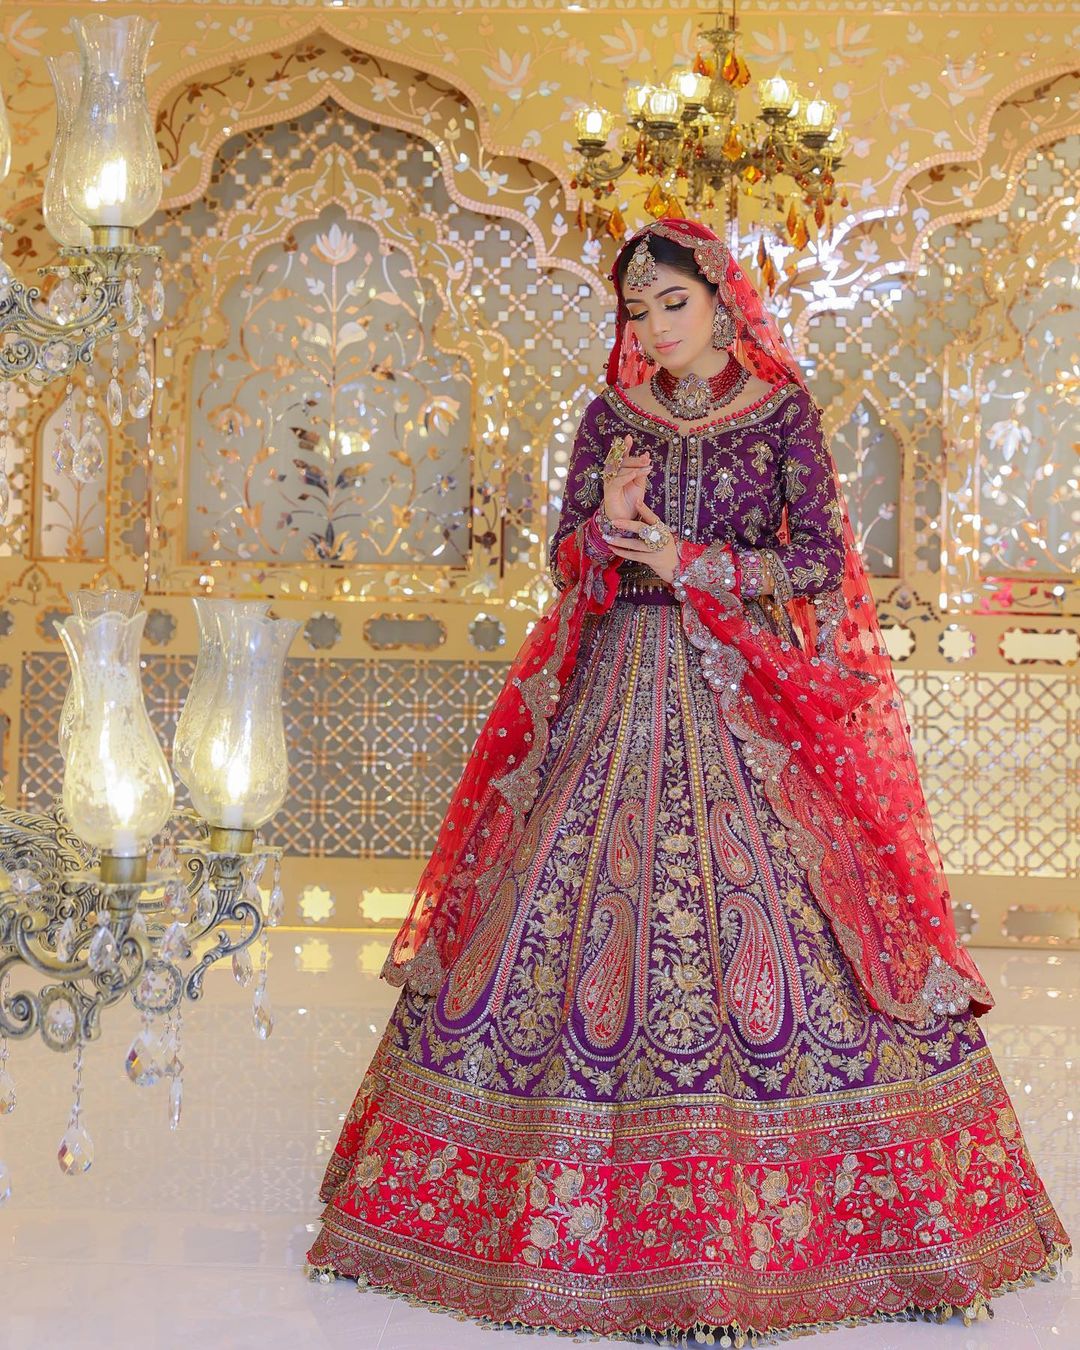 Laiba Khan Looks Fabulous in Vibrant Bridal Dress